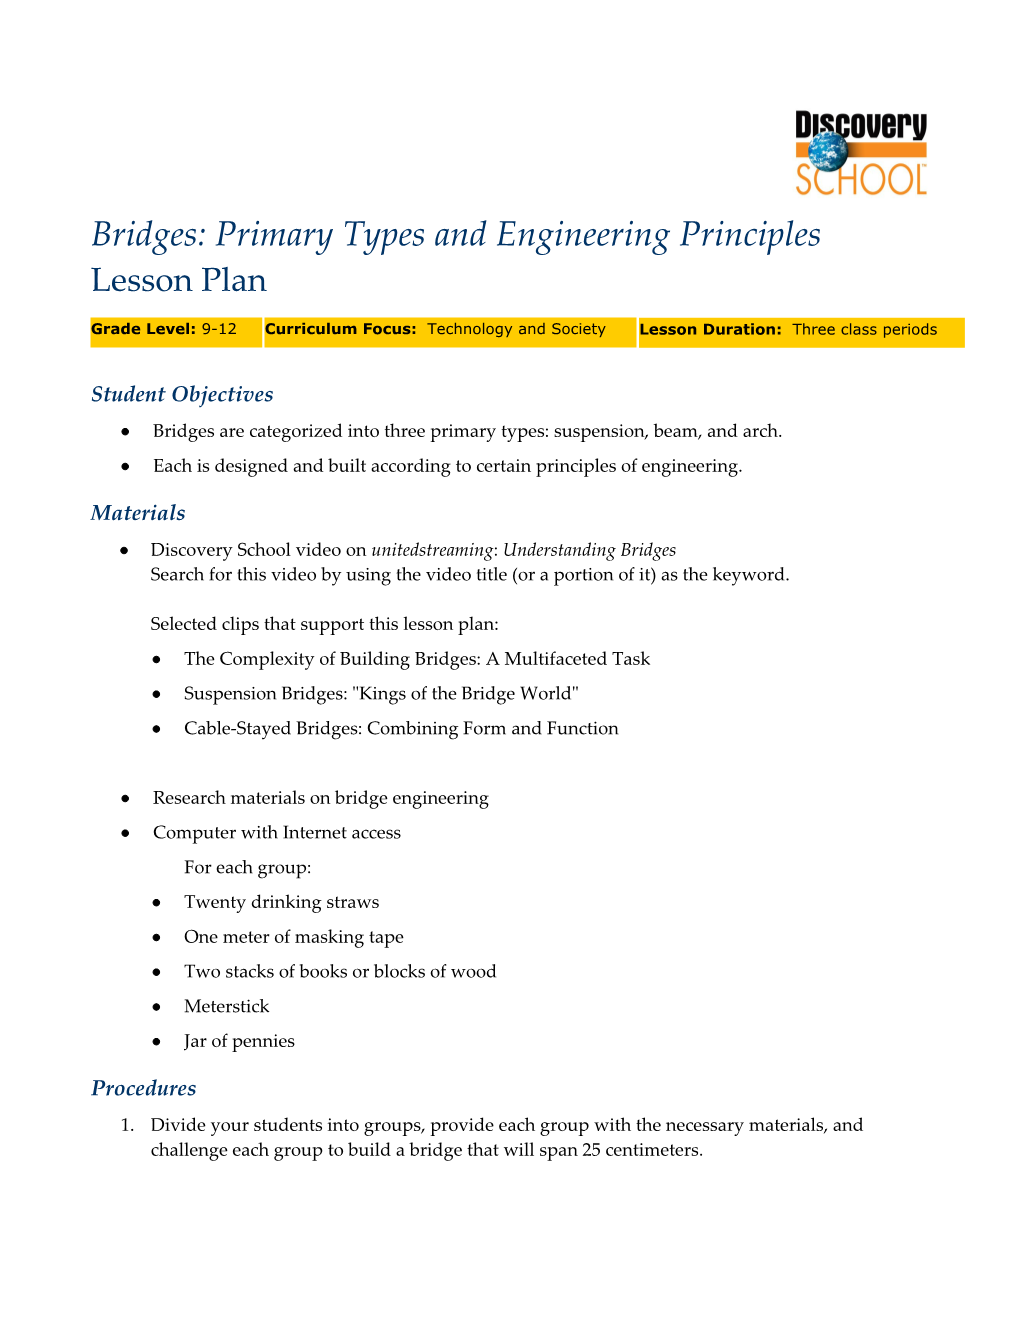 Bridges Primary Types and Engineering Principles